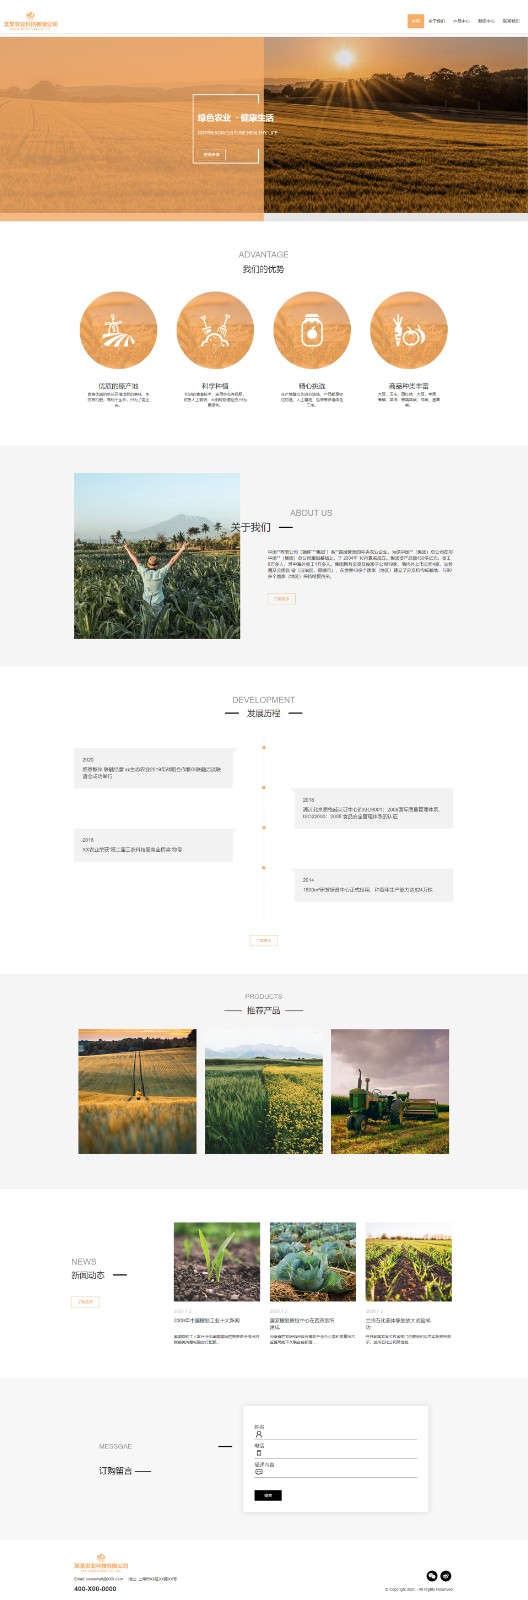 农业网站模板-agriculture-003